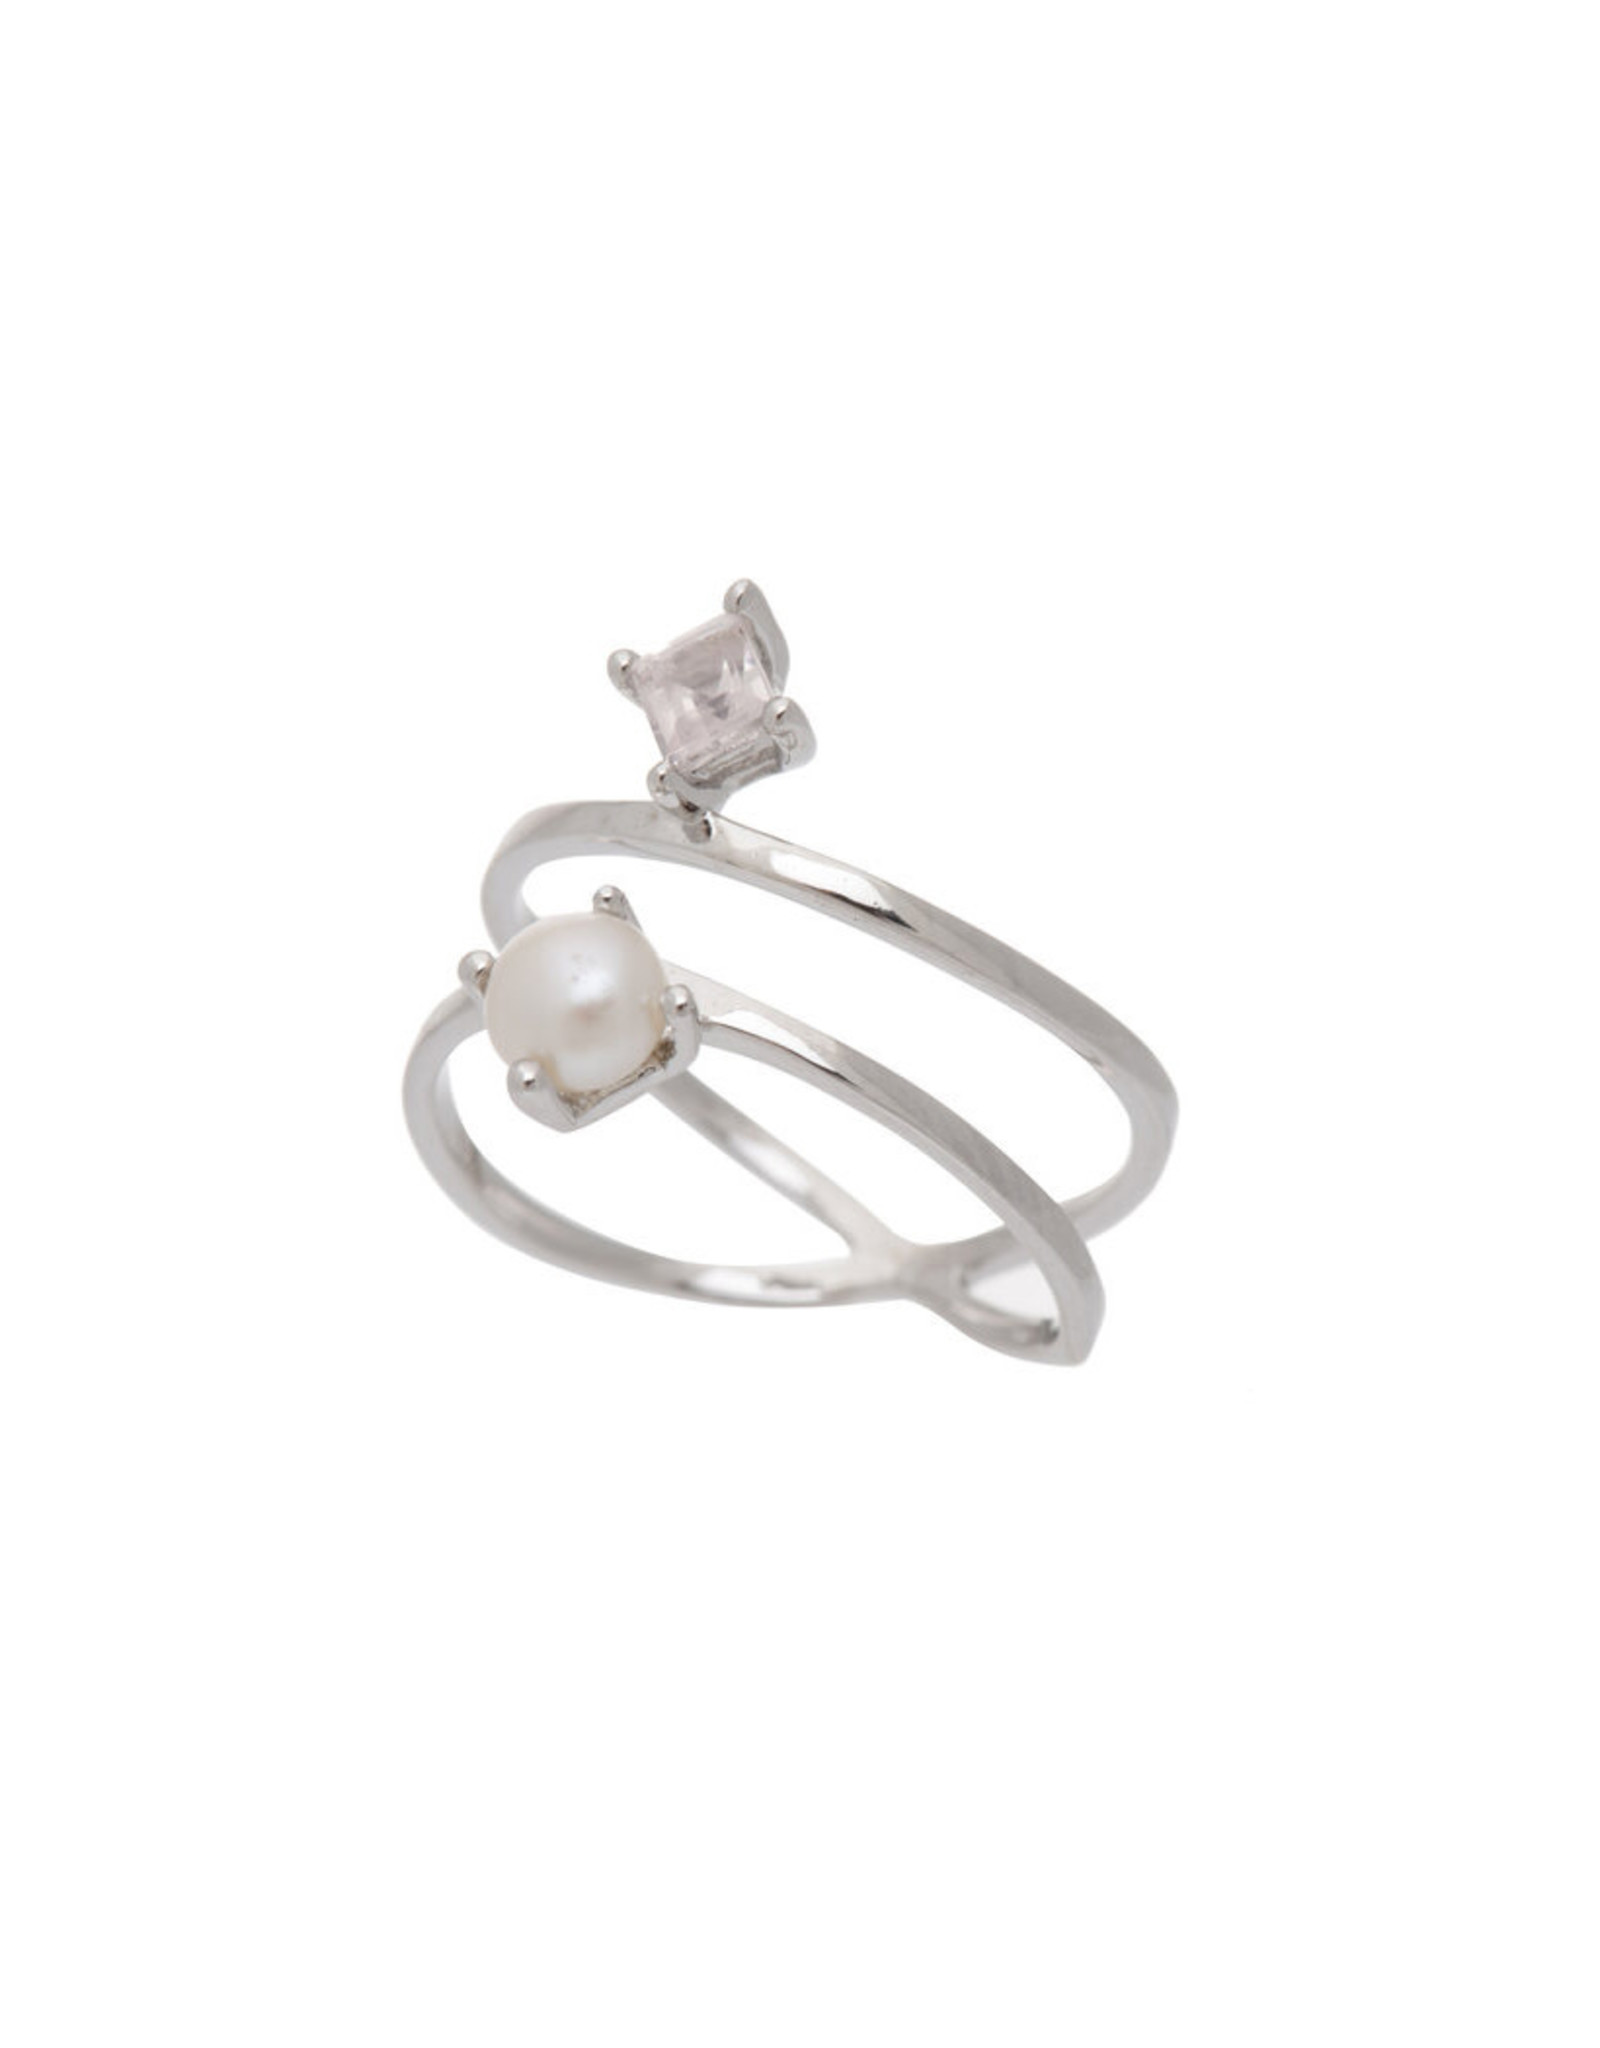 Sarah Mulder Jewelry Silver Cassie Ring - Rose Quartz + Pearl - 7